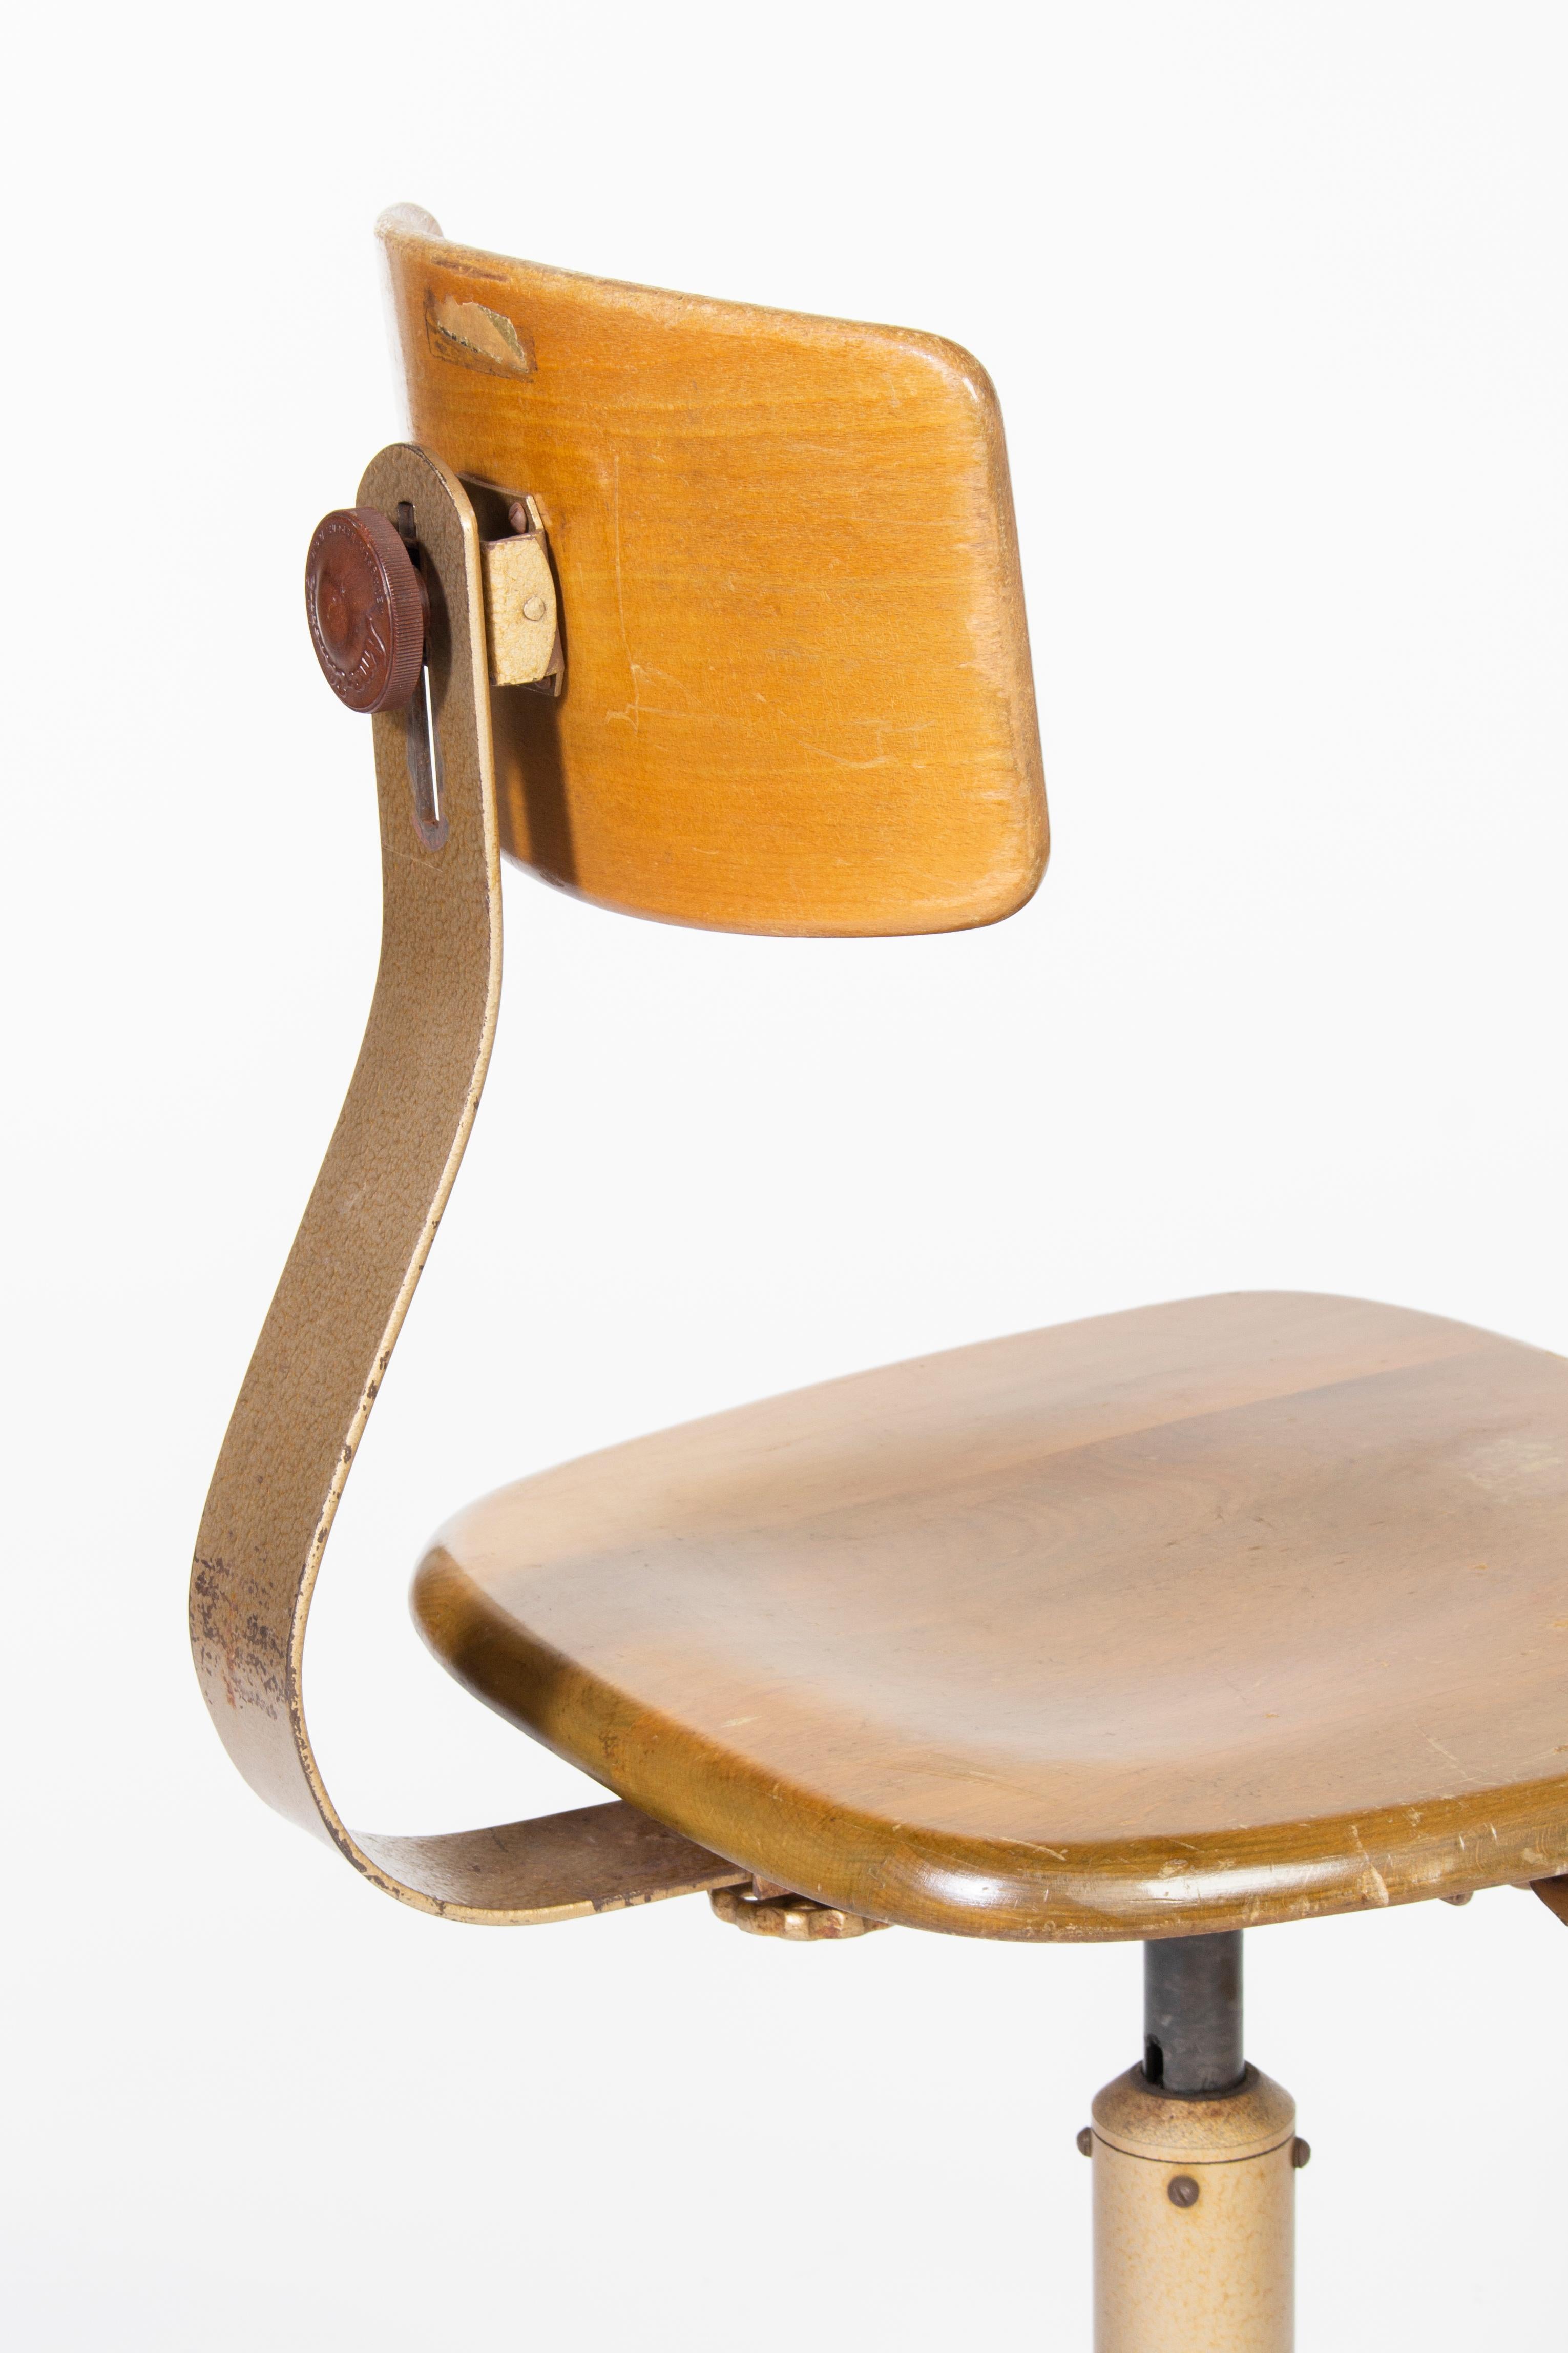 German Bauhaus Ama Elastik Wooden Workshop Swivel Chair, Model No. 364 For Sale